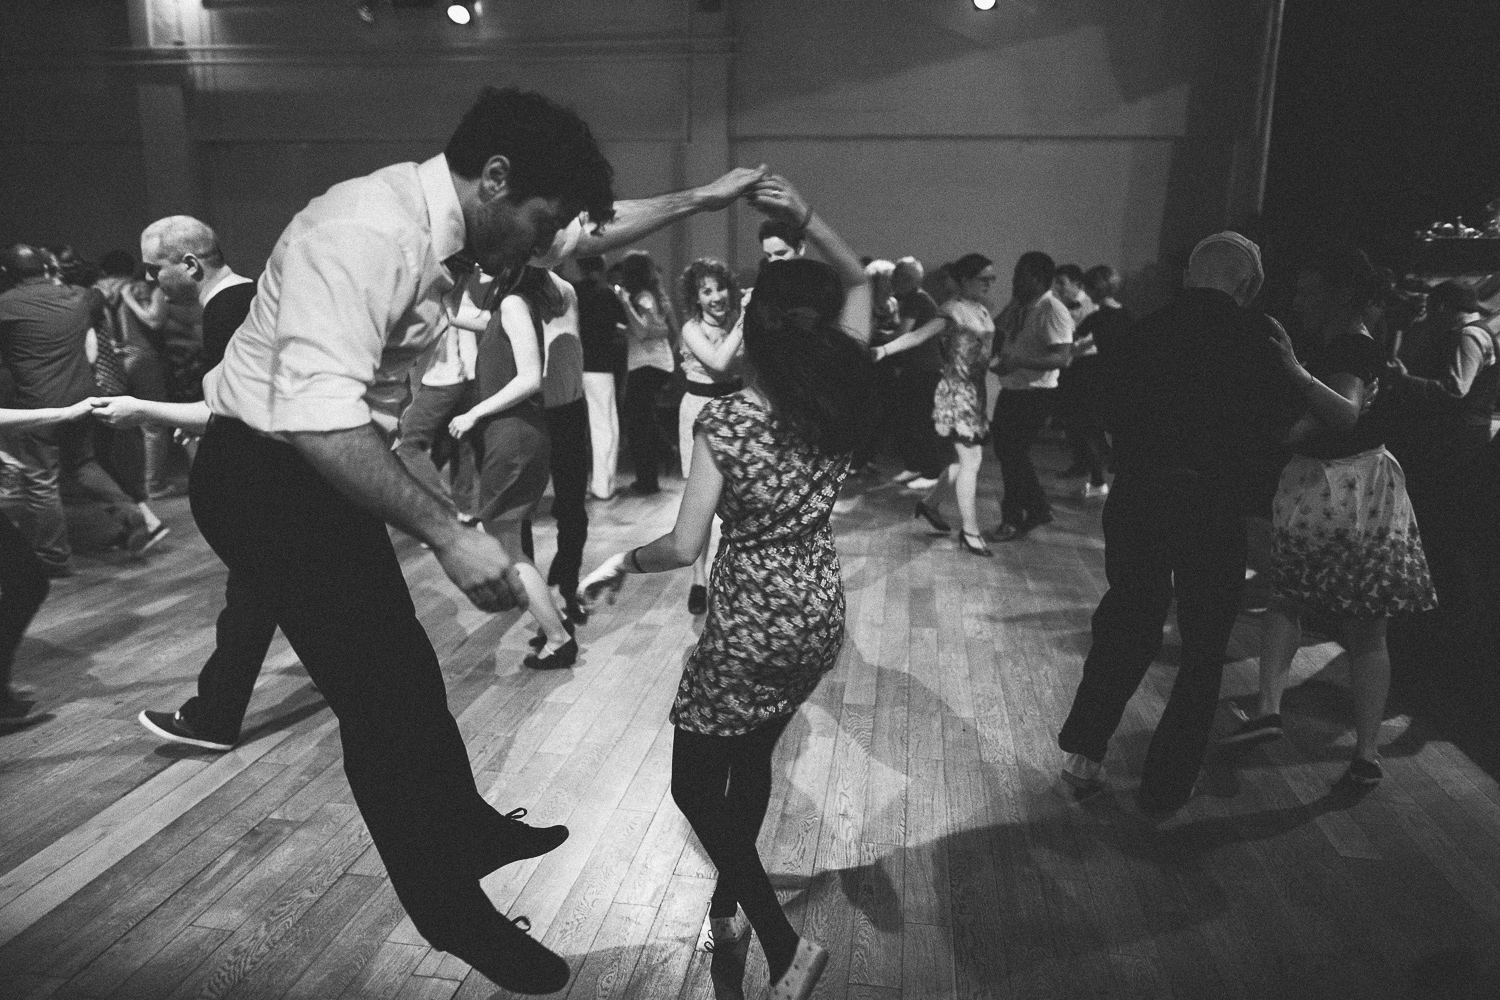  Grand Bal Swing au MAS avec les Jellyrolls Combo. For Dancers Only: http://d.pr/1fEEY - http://www.ebobrie.com/mas-09052015/ 